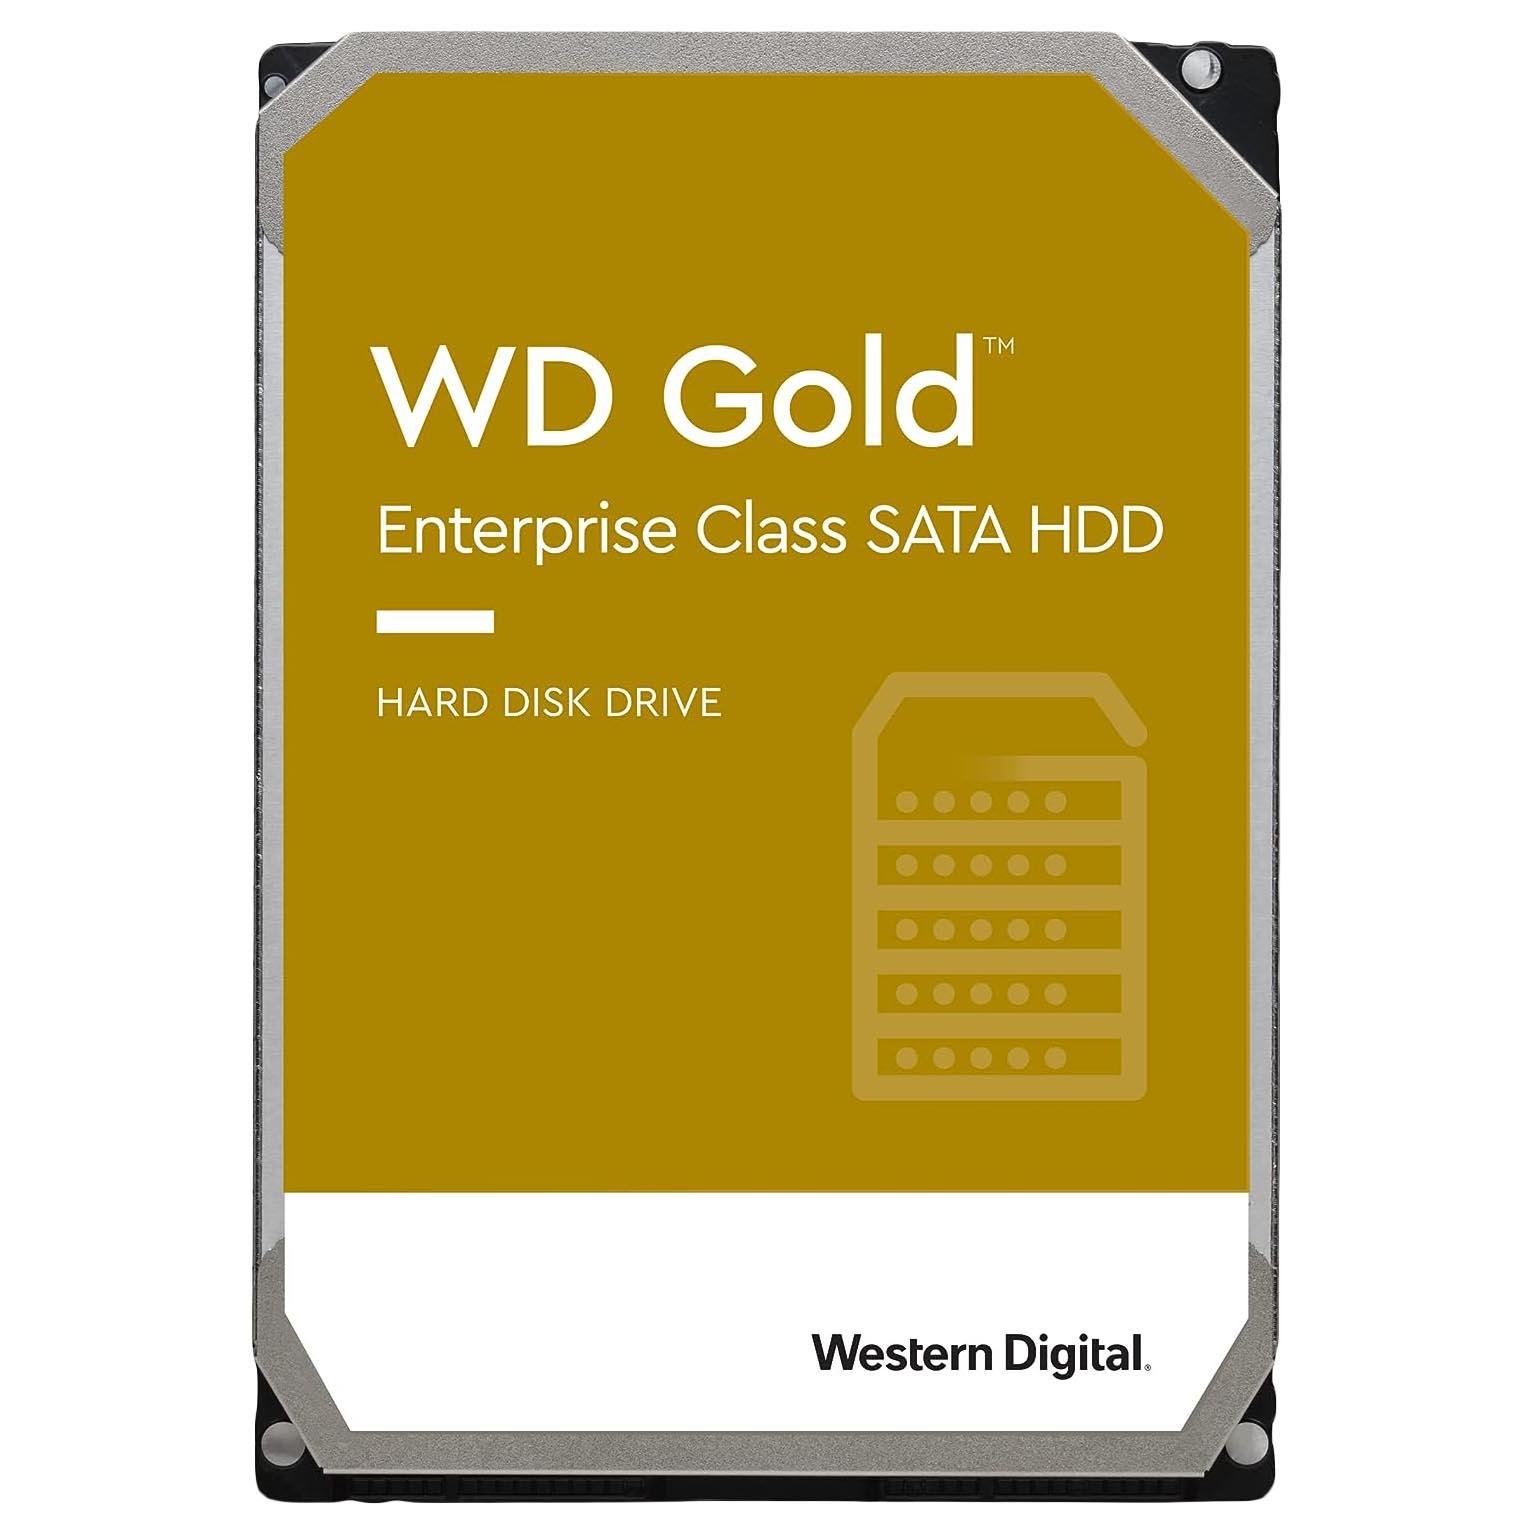 Внутренний жесткий диск Western Digital WD Gold Enterprise Class, WD8004VRYZ, 8Тб жесткий диск western digital wd gold 6 тб 3 5 wd6003fryz